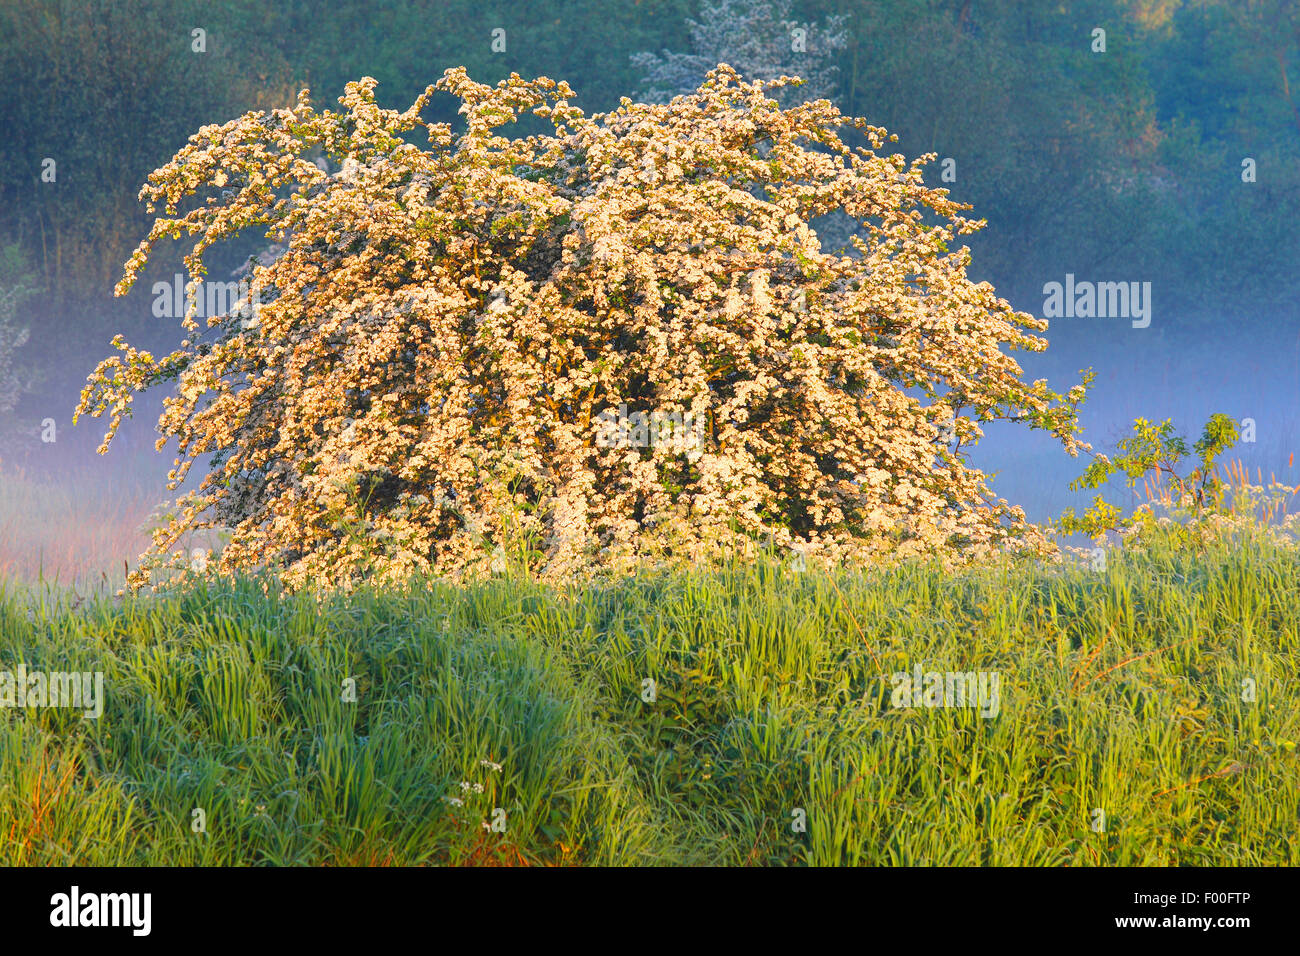 common hawthorn, singleseed hawthorn, English hawthorn (Crataegus monogyna), flowering hawthorn in morning light with mist, Belgium Stock Photo